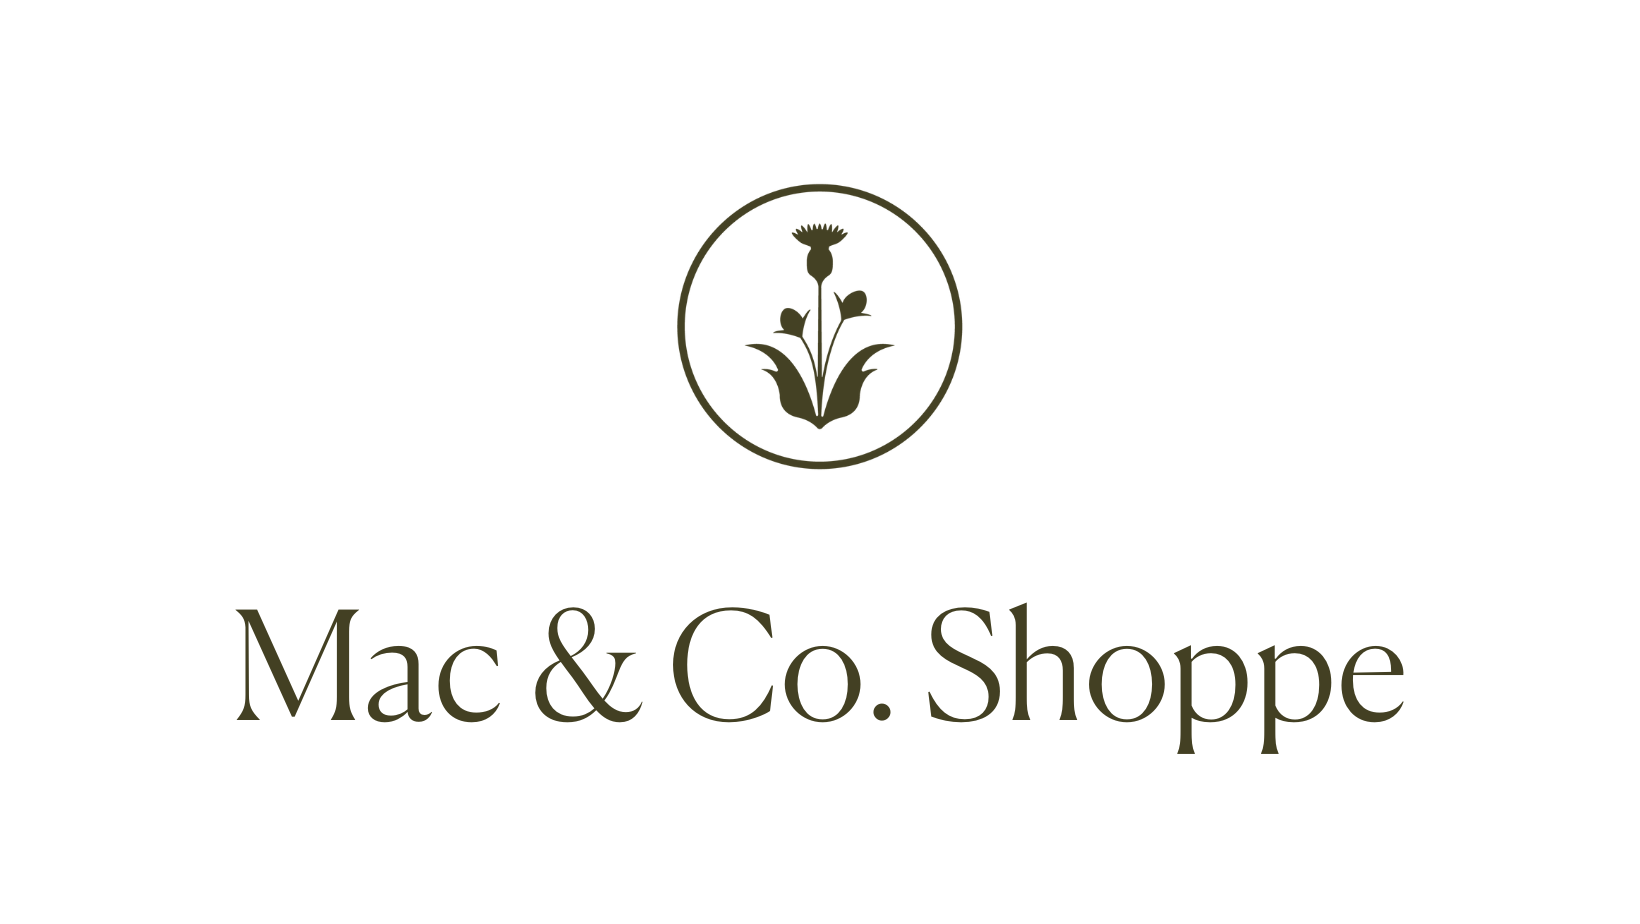 Mac & Co. Shoppe